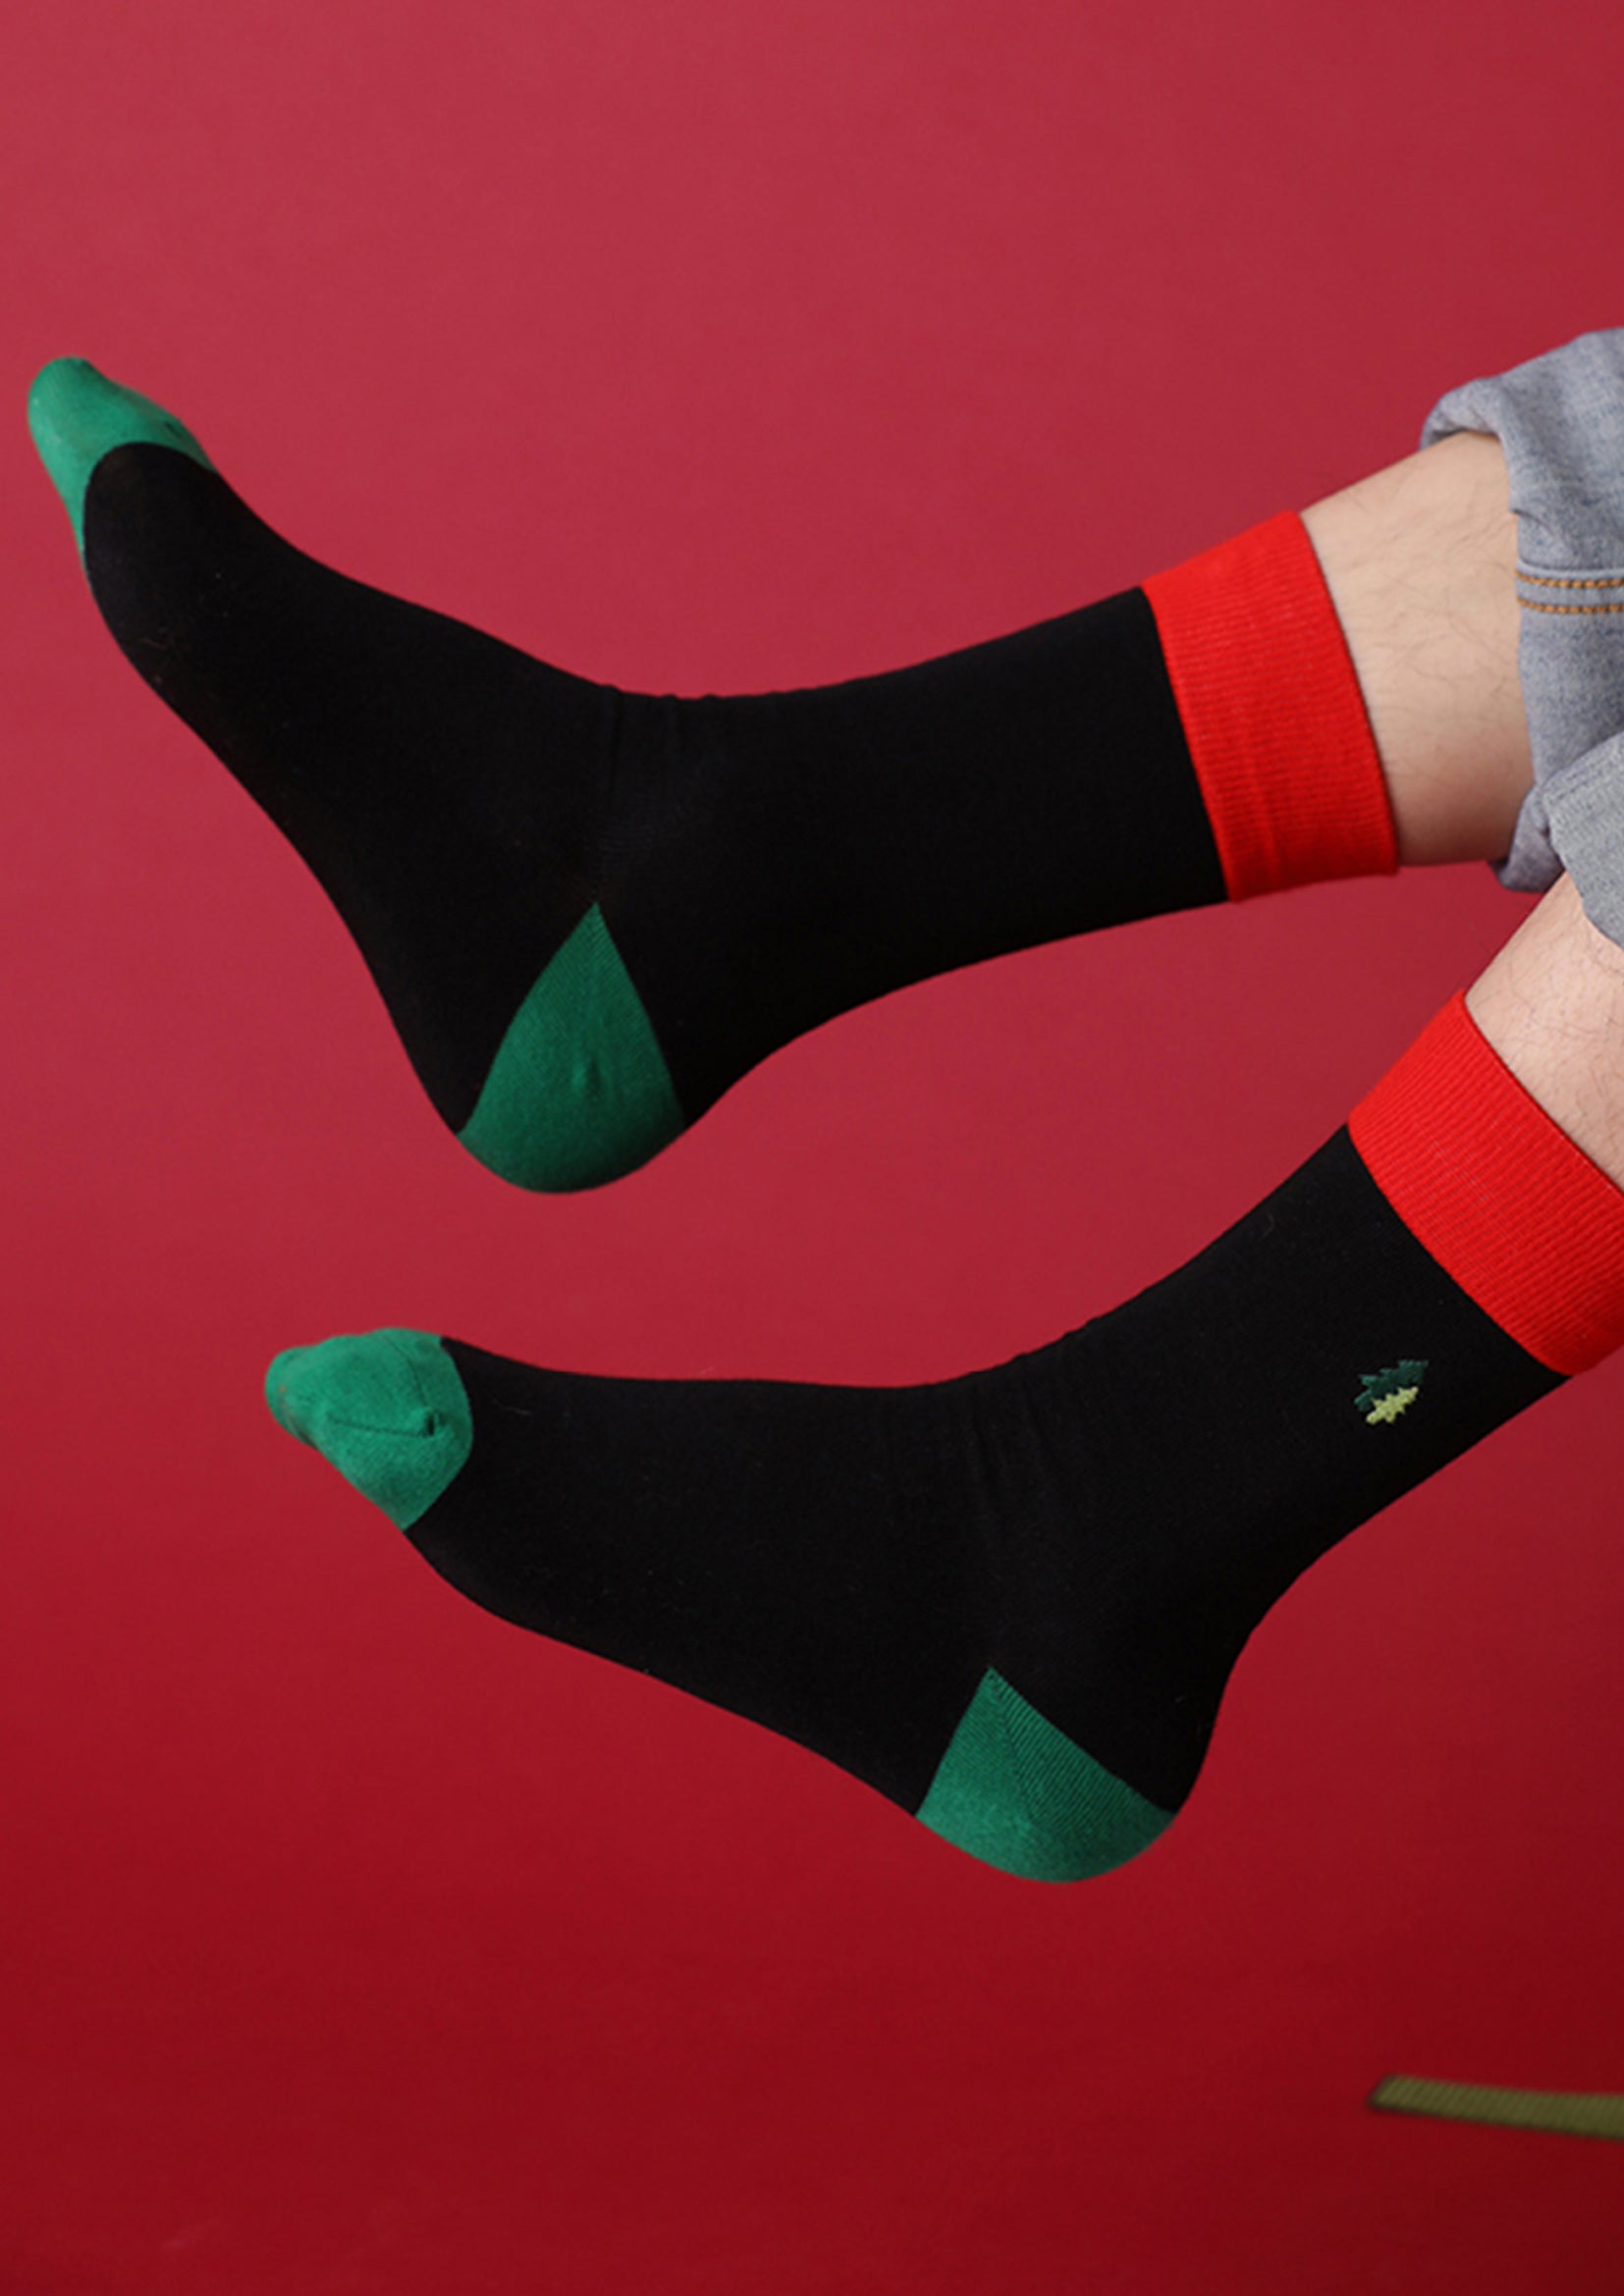 Christmas mid-calf sock - Xmas black